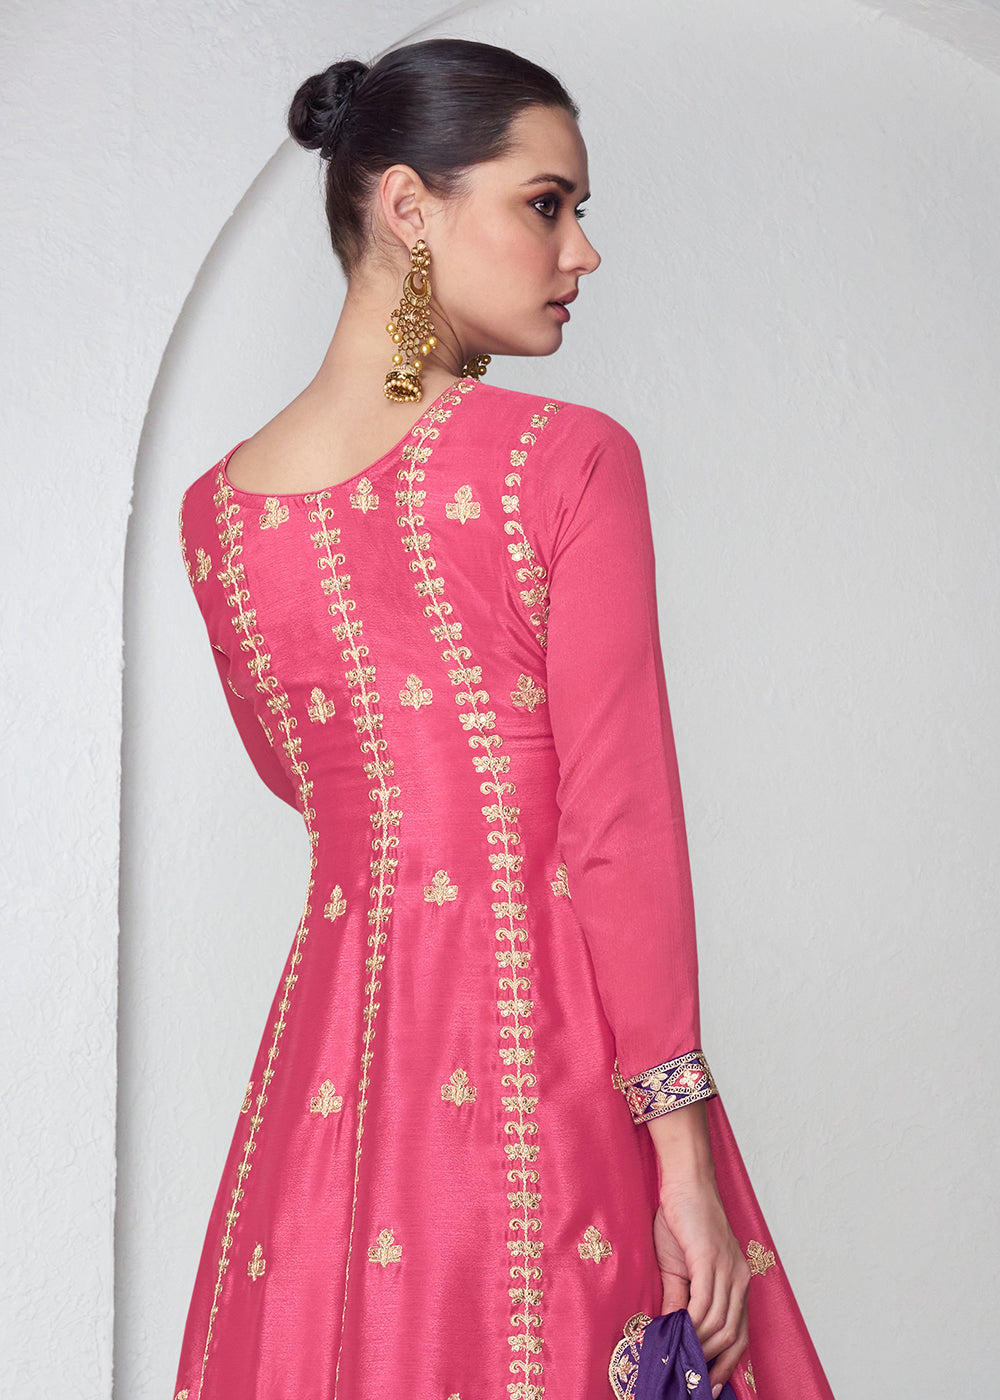 Buy Now Amazing Pink & Purple Chinnon Silk Wedding Festive Palazzo Suit Online in USA, UK, Canada, Germany, Australia & Worldwide at Empress Clothing.